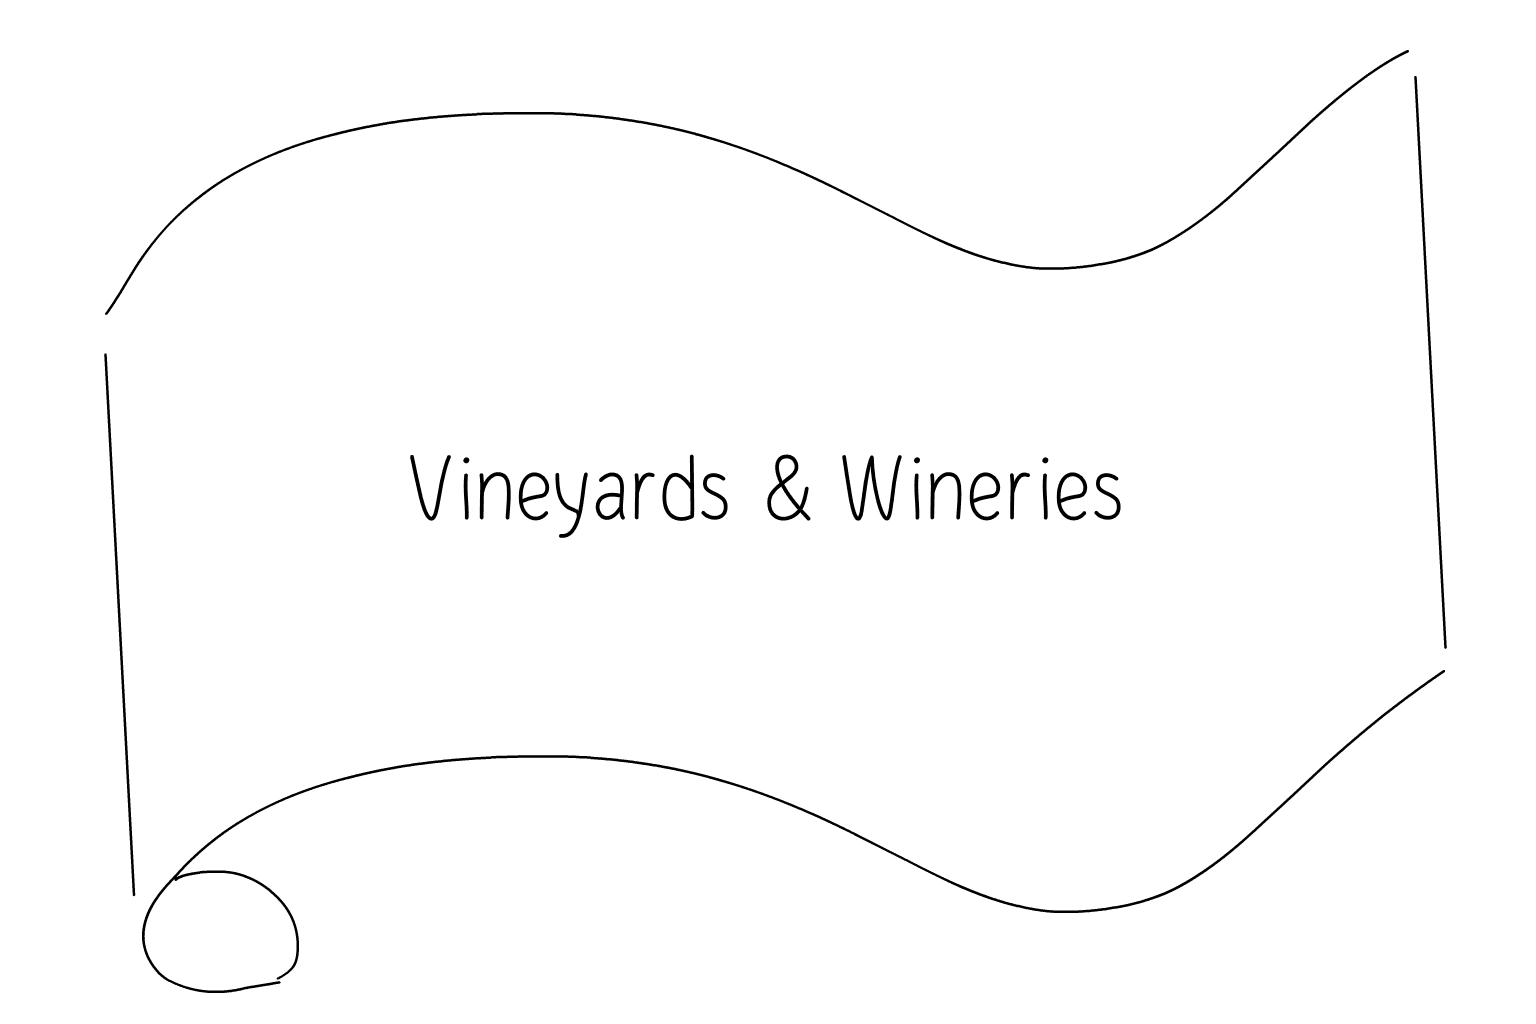 Illustration of Vineyards & Wineries